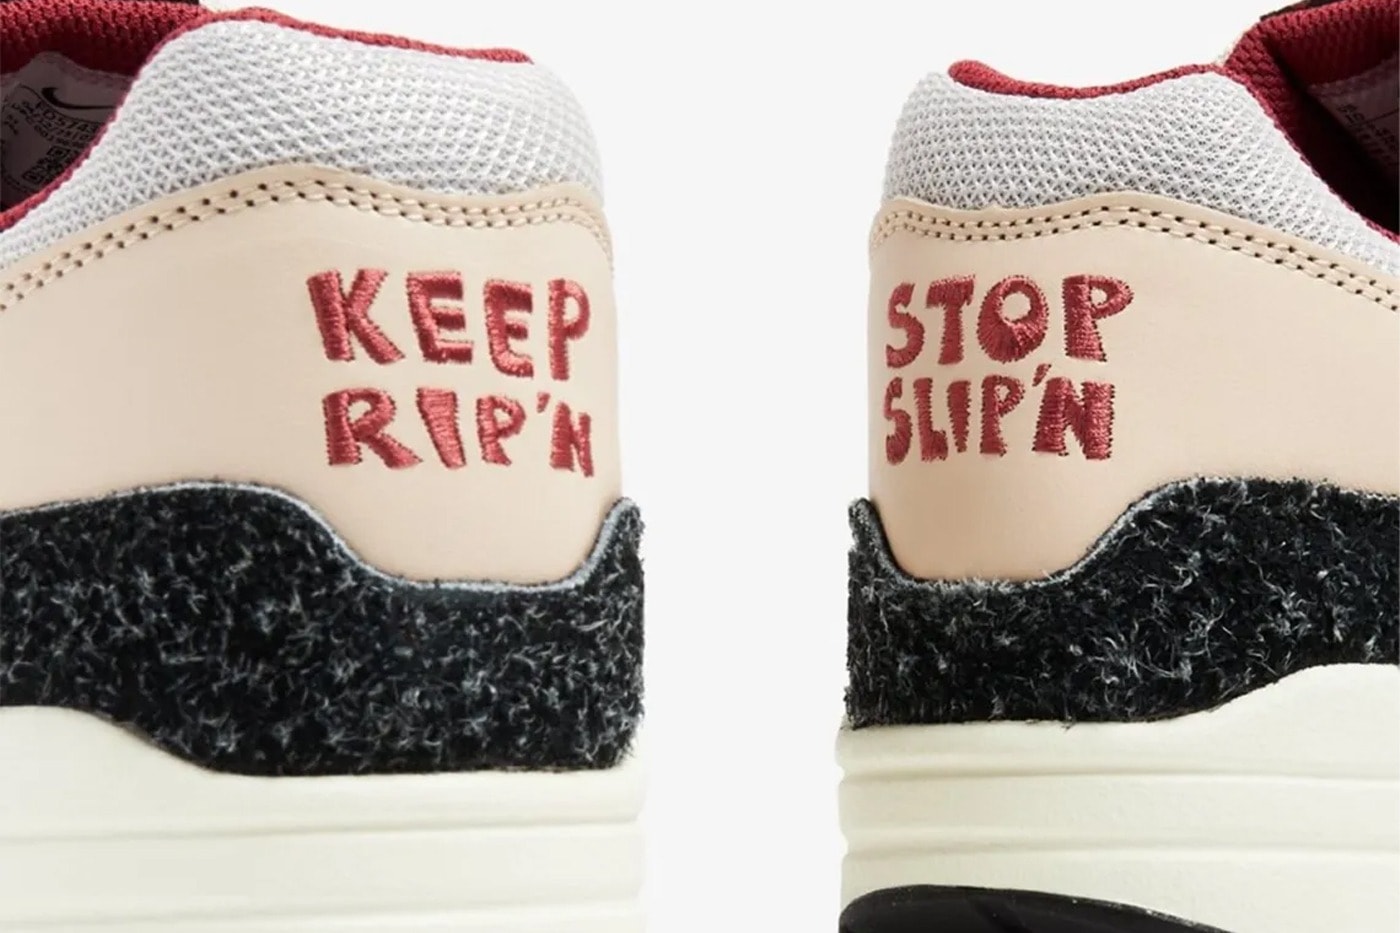 Nike Air Max 1全新配色「Keep Rippin Stop Slippin」正式登場